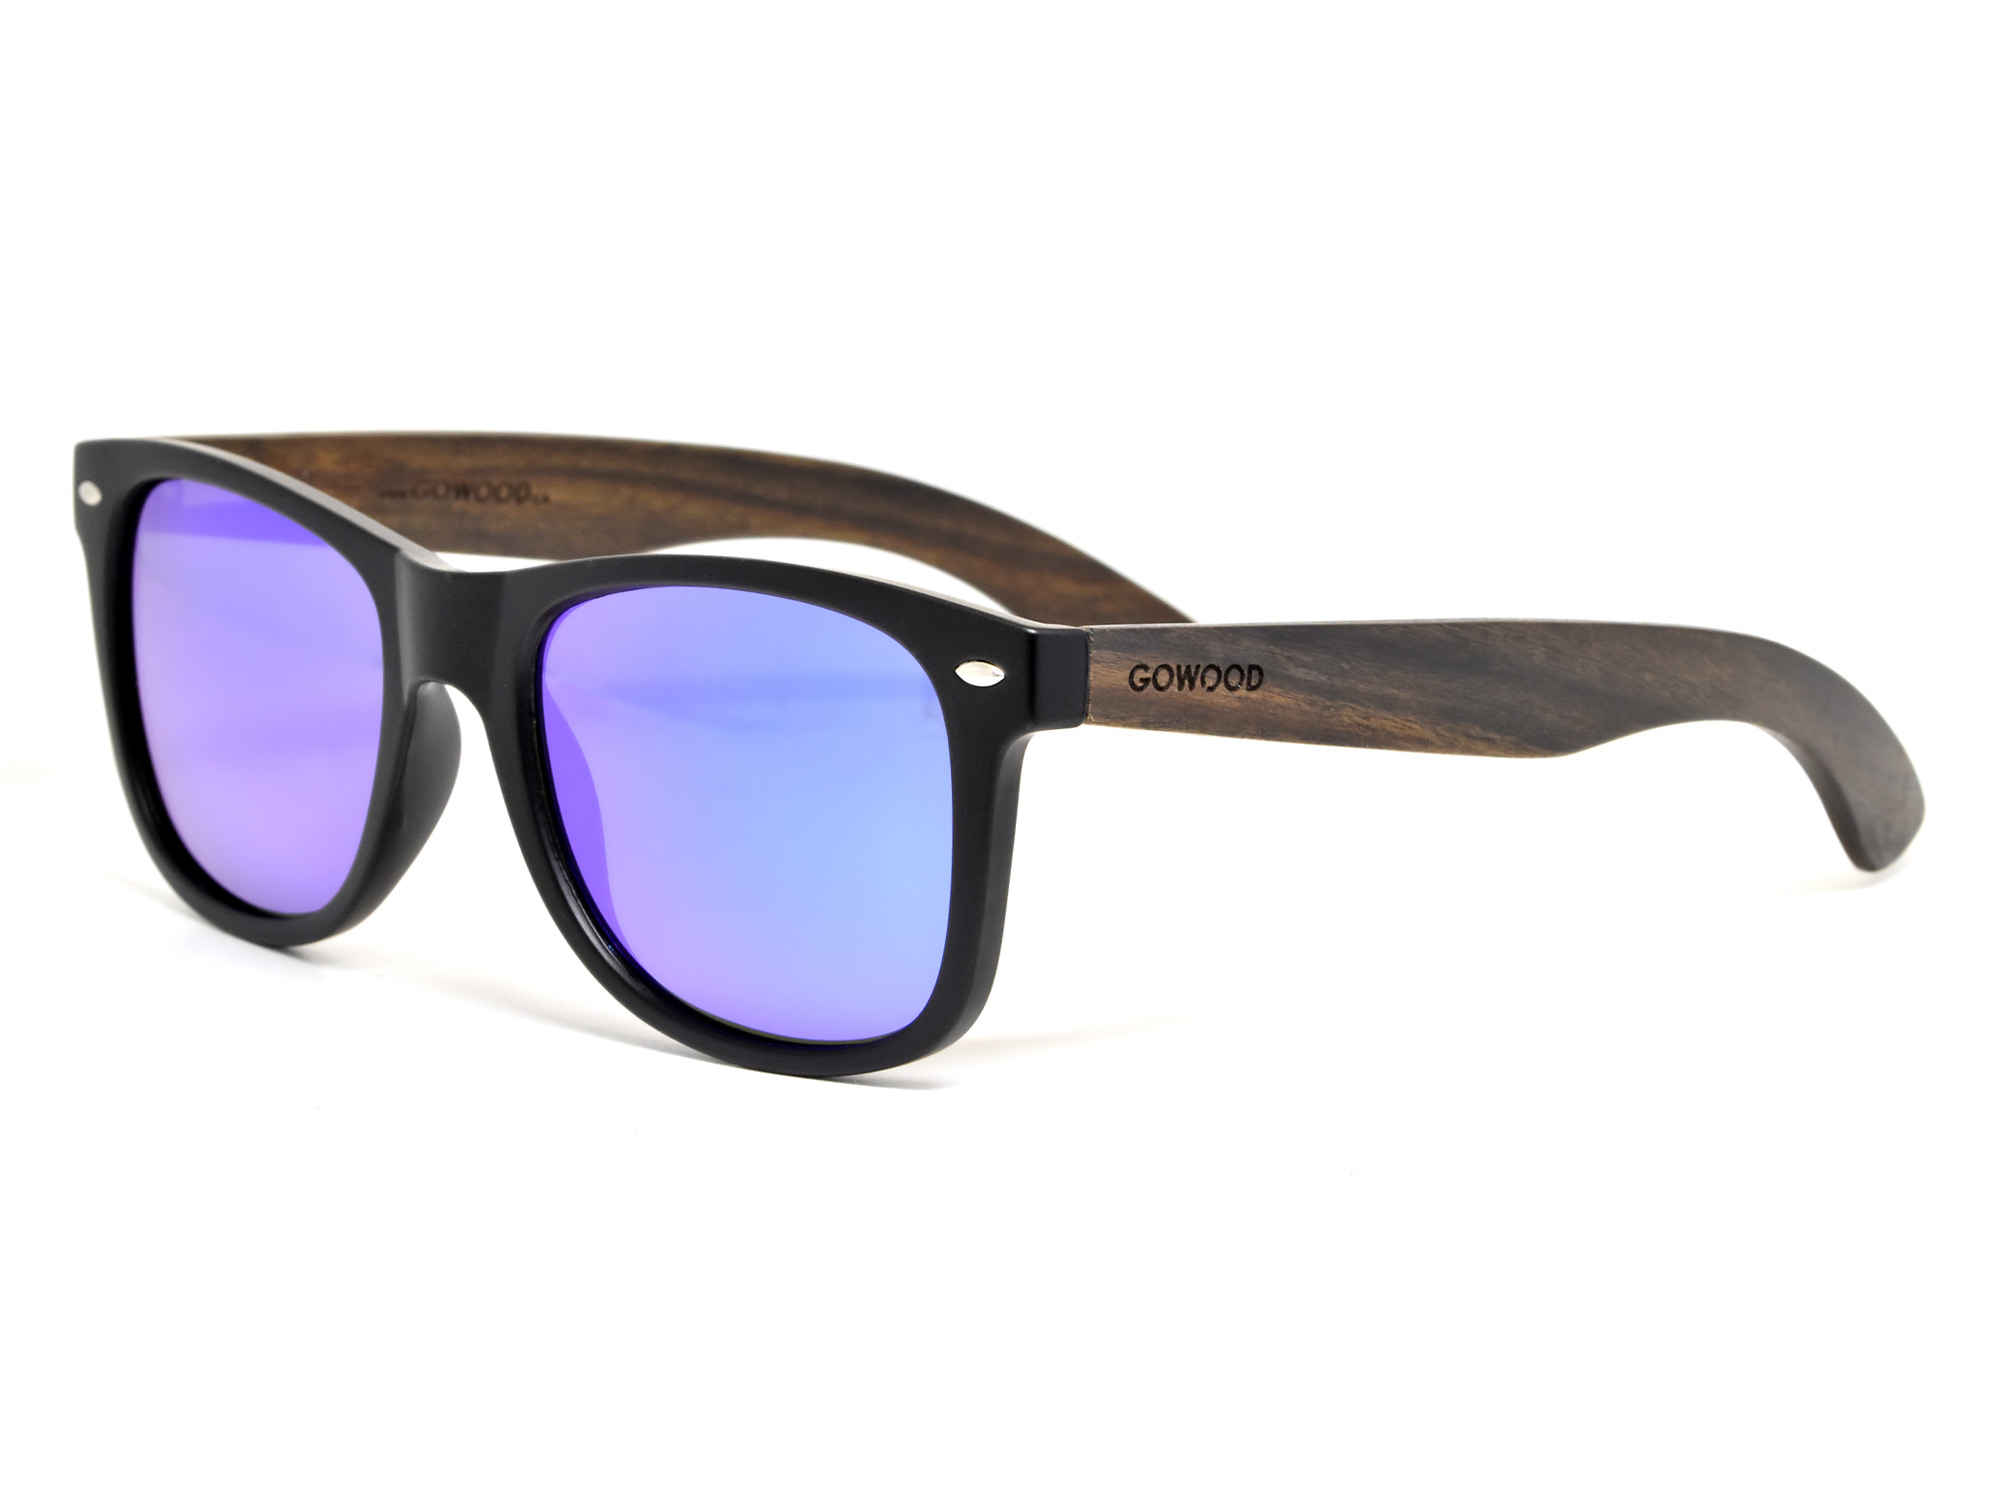 Ebony wood sunglasses with blue mirrored lenses